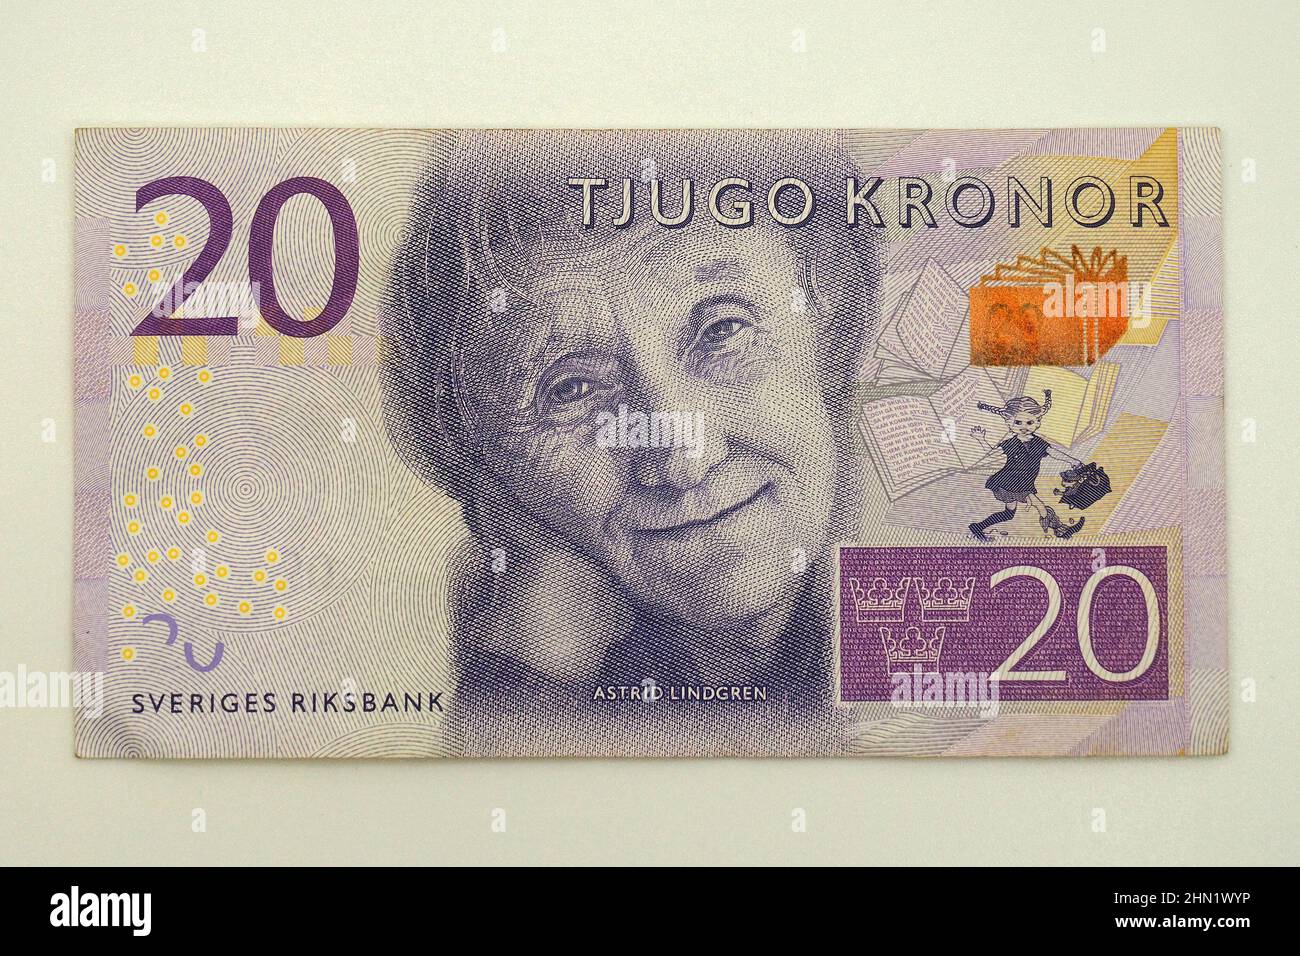 Ventidue (20) banconota da corona svedese (SEK), Schweden, Sverige, Europa  Foto stock - Alamy